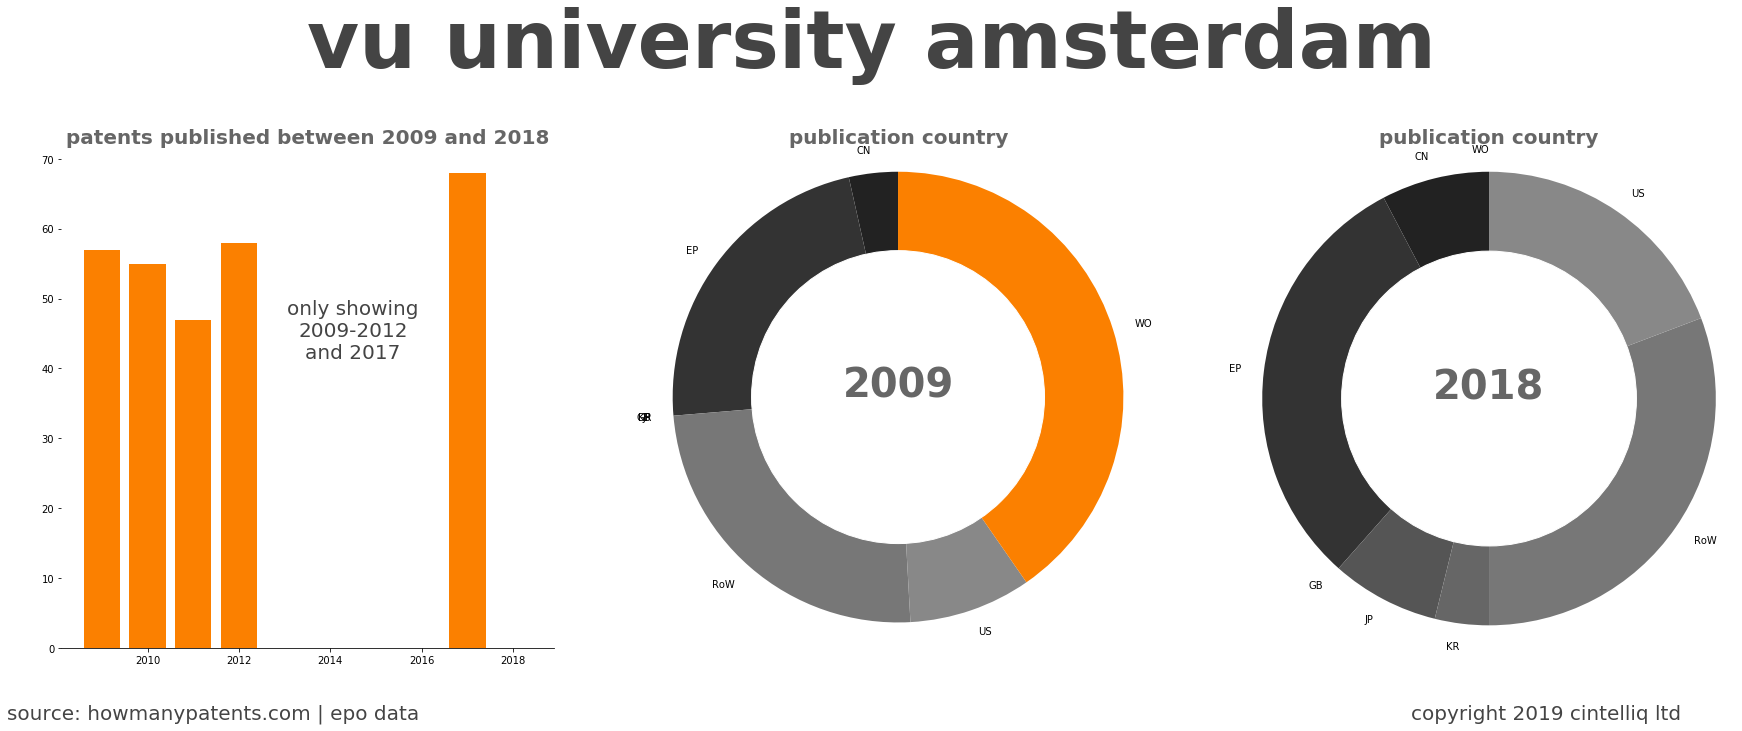 summary of patents for Vu University Amsterdam